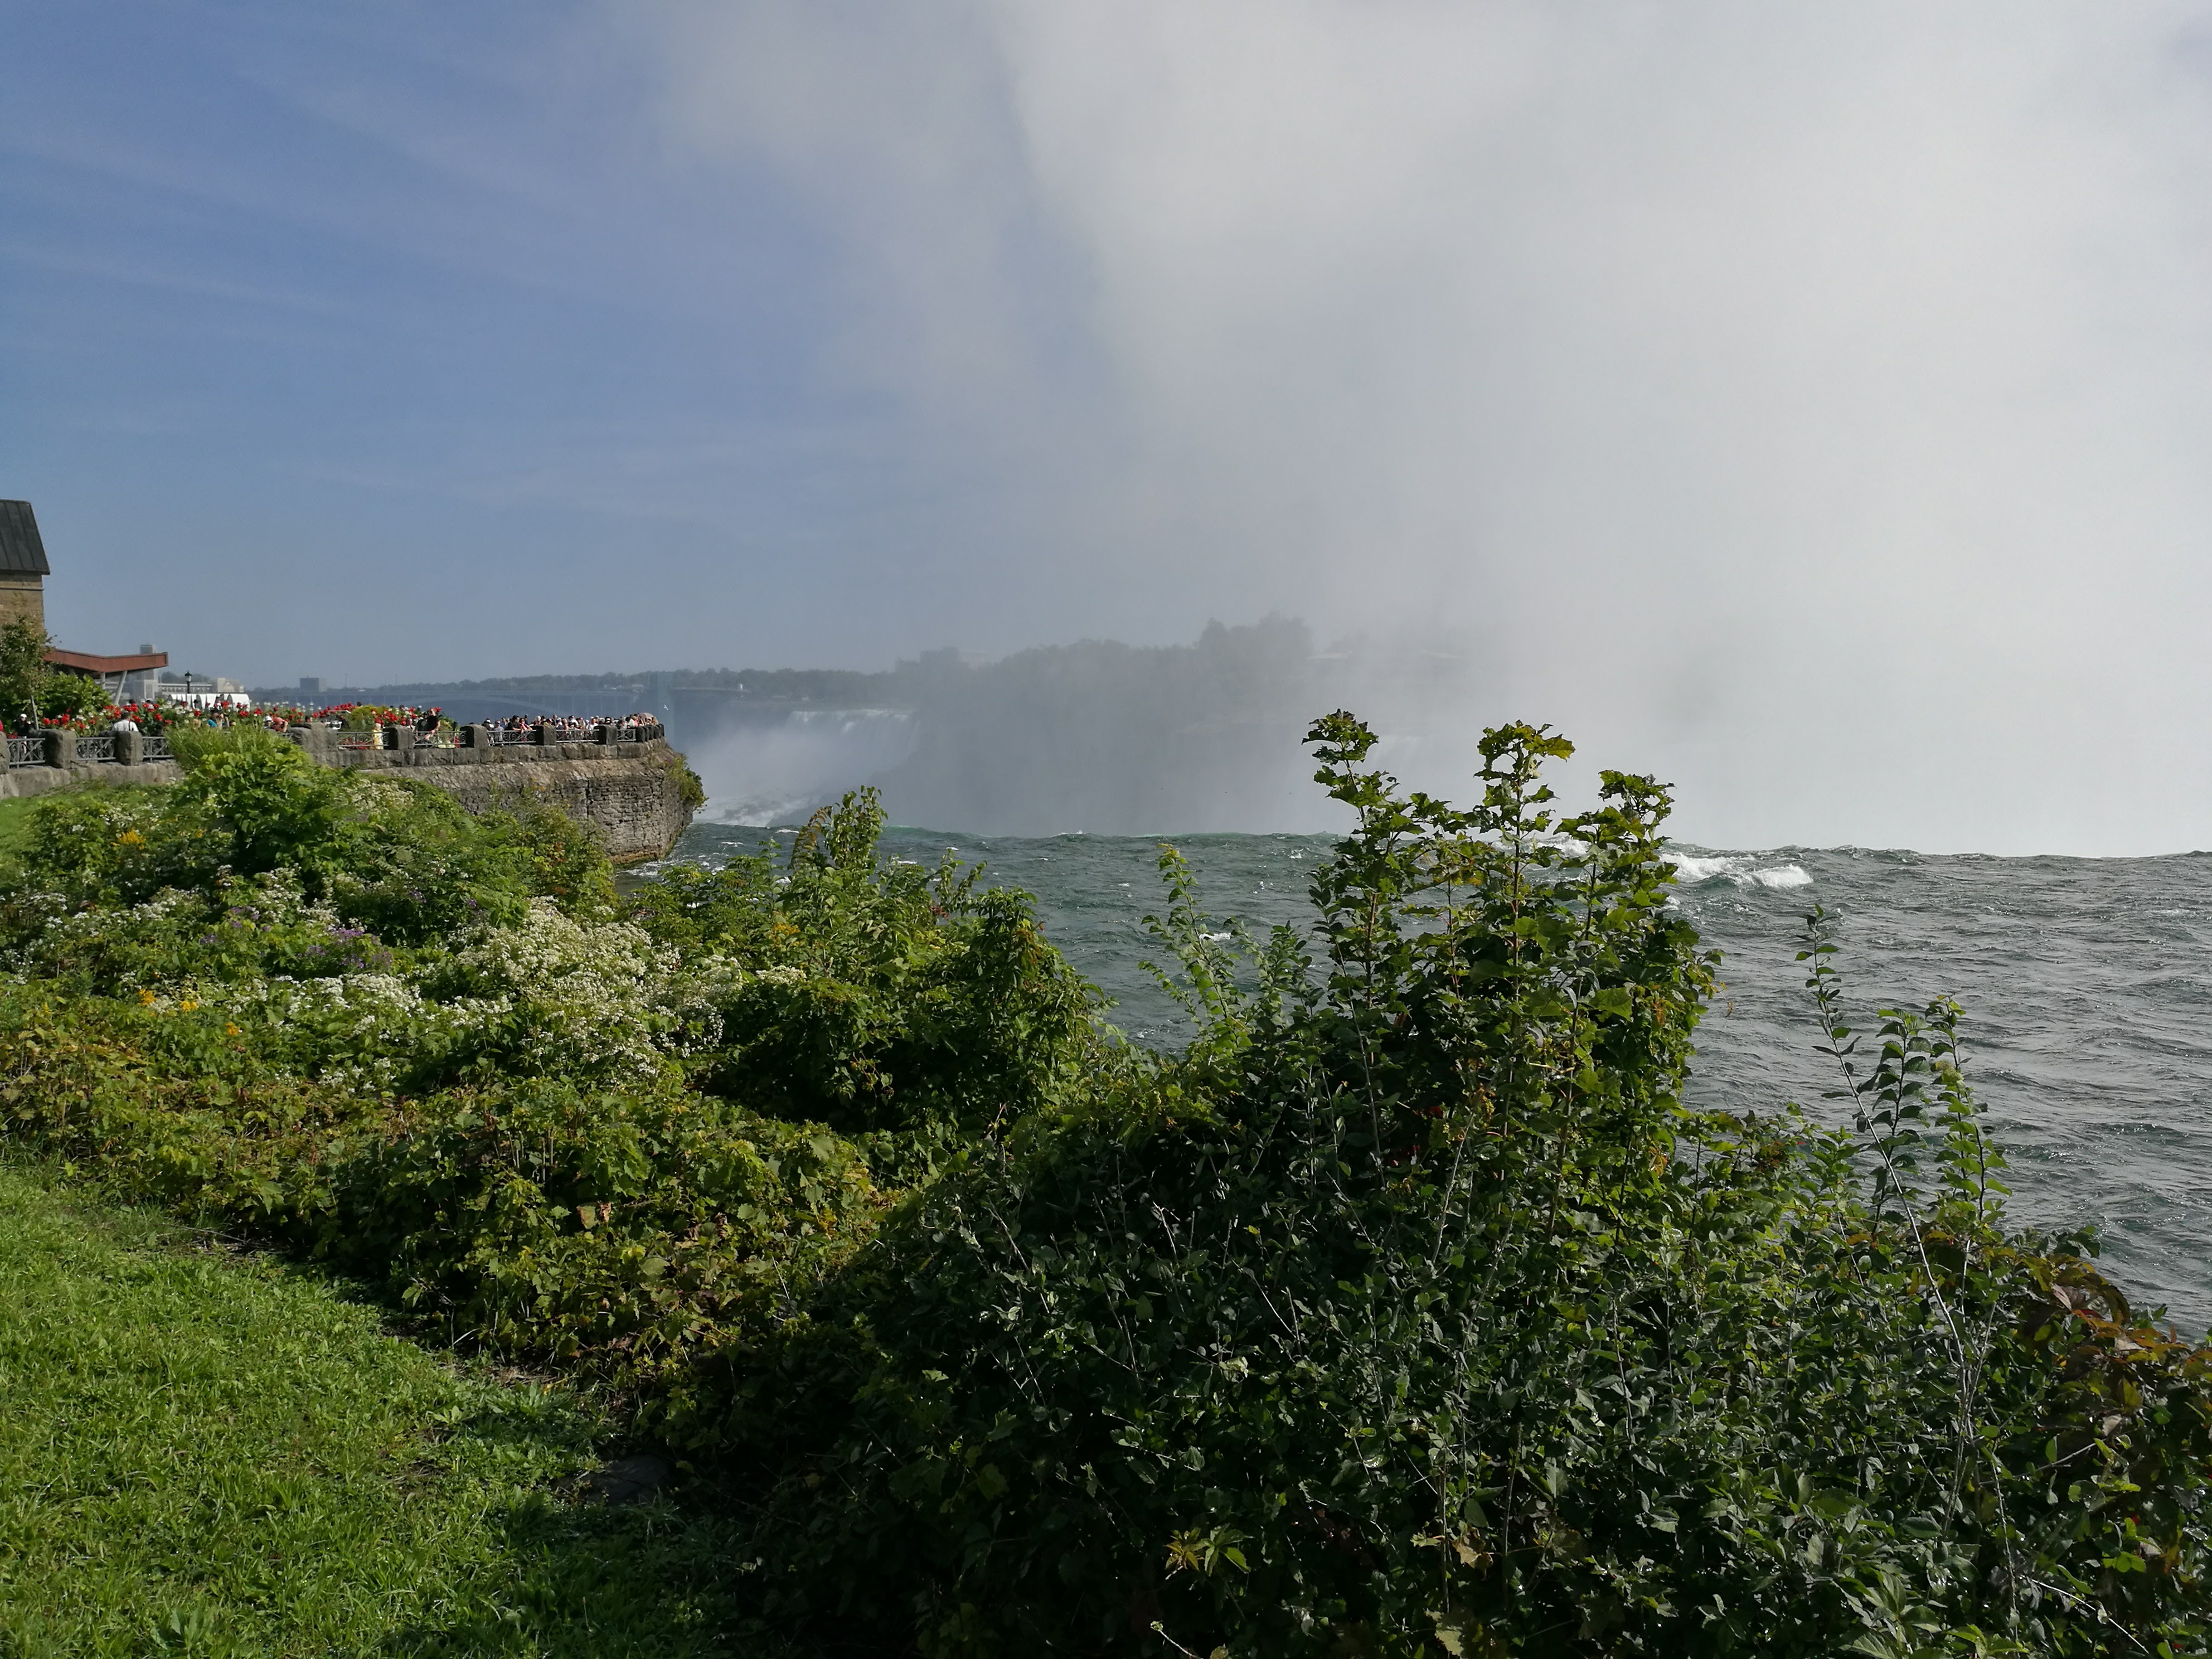 The Horseshoe Falls at Niagara